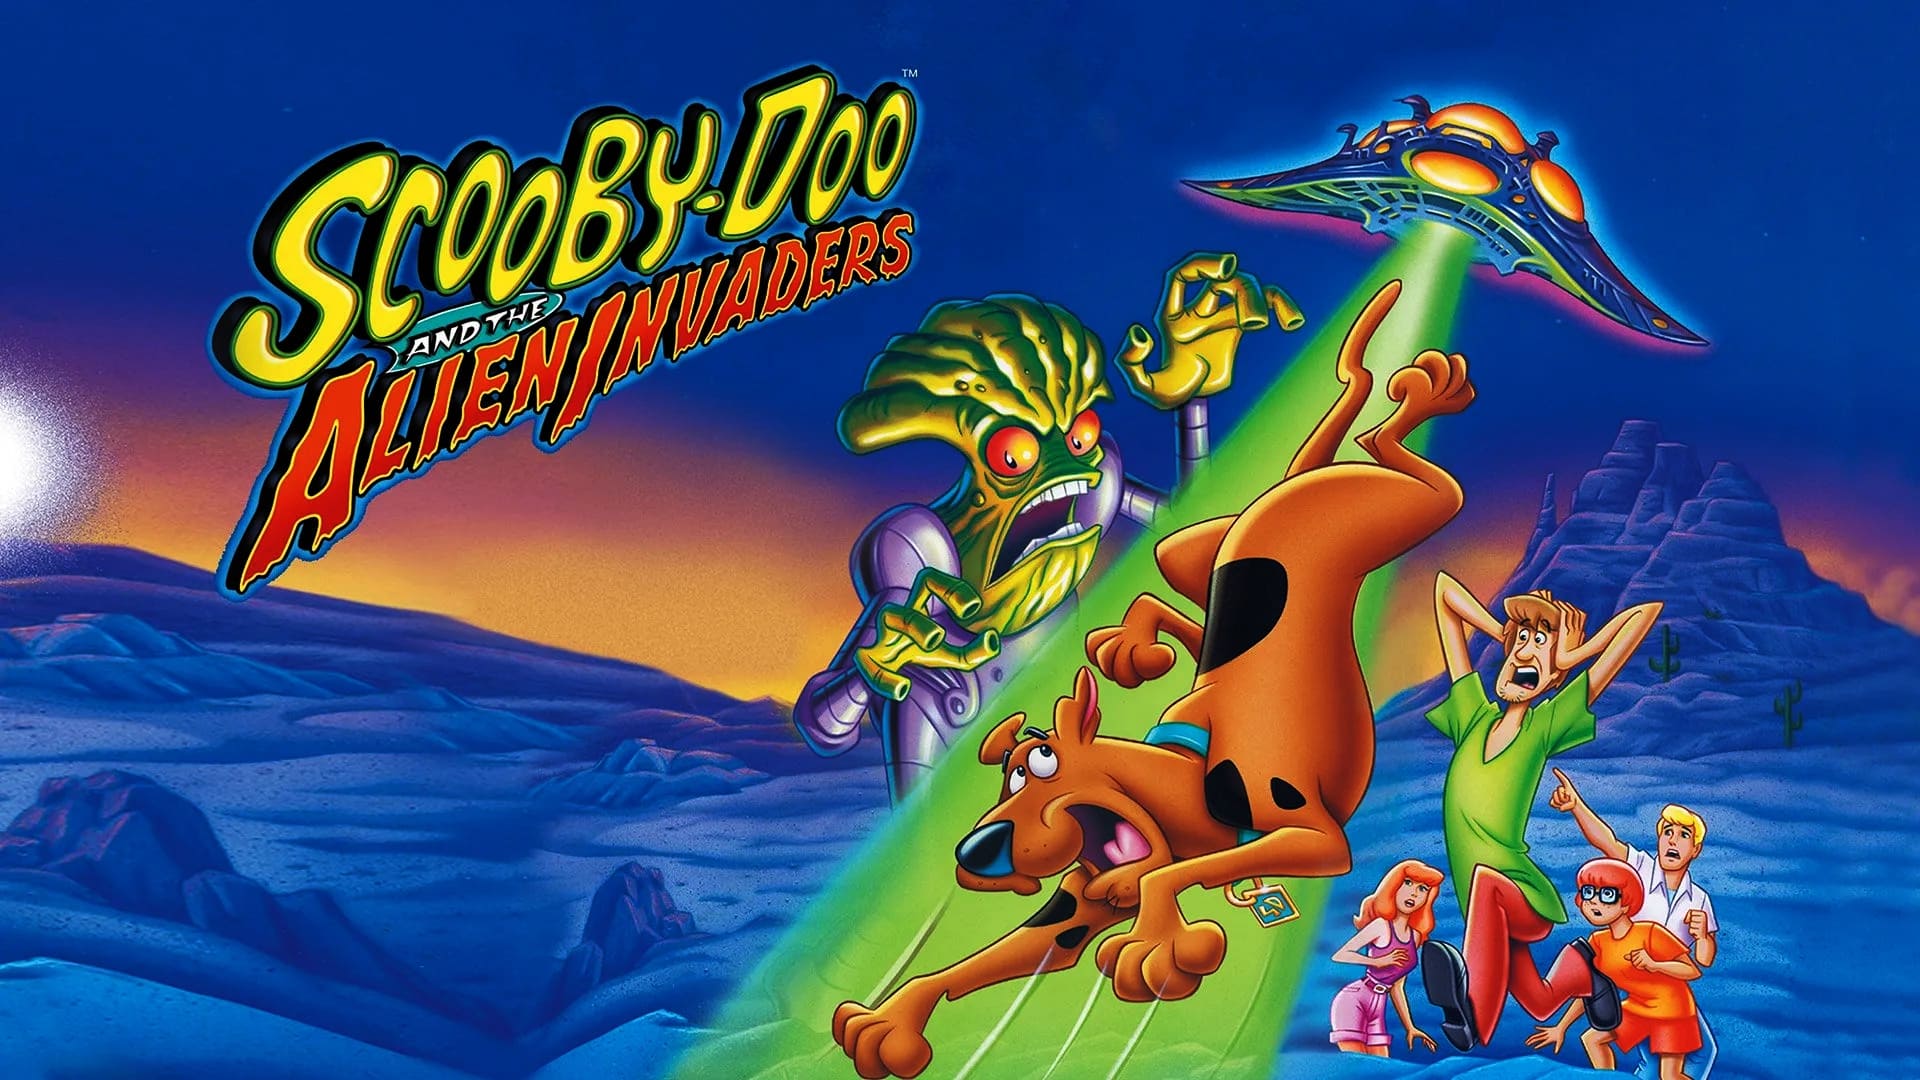 Scooby-Doo og Invasion Fra Rummet